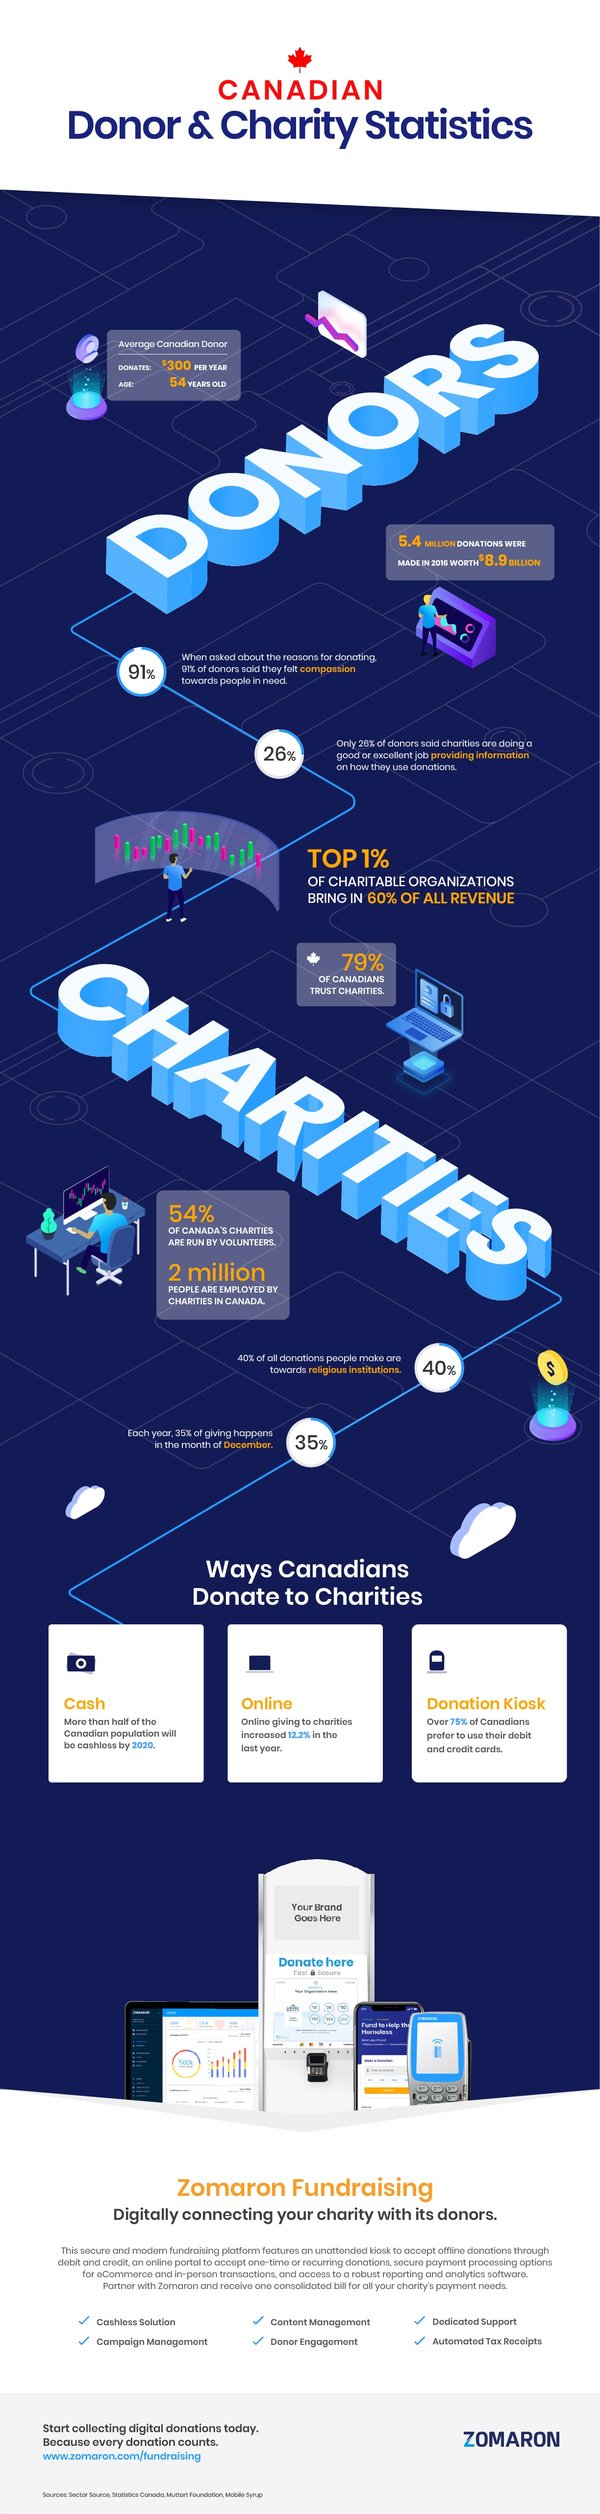 zomaron-fundraising-infographic